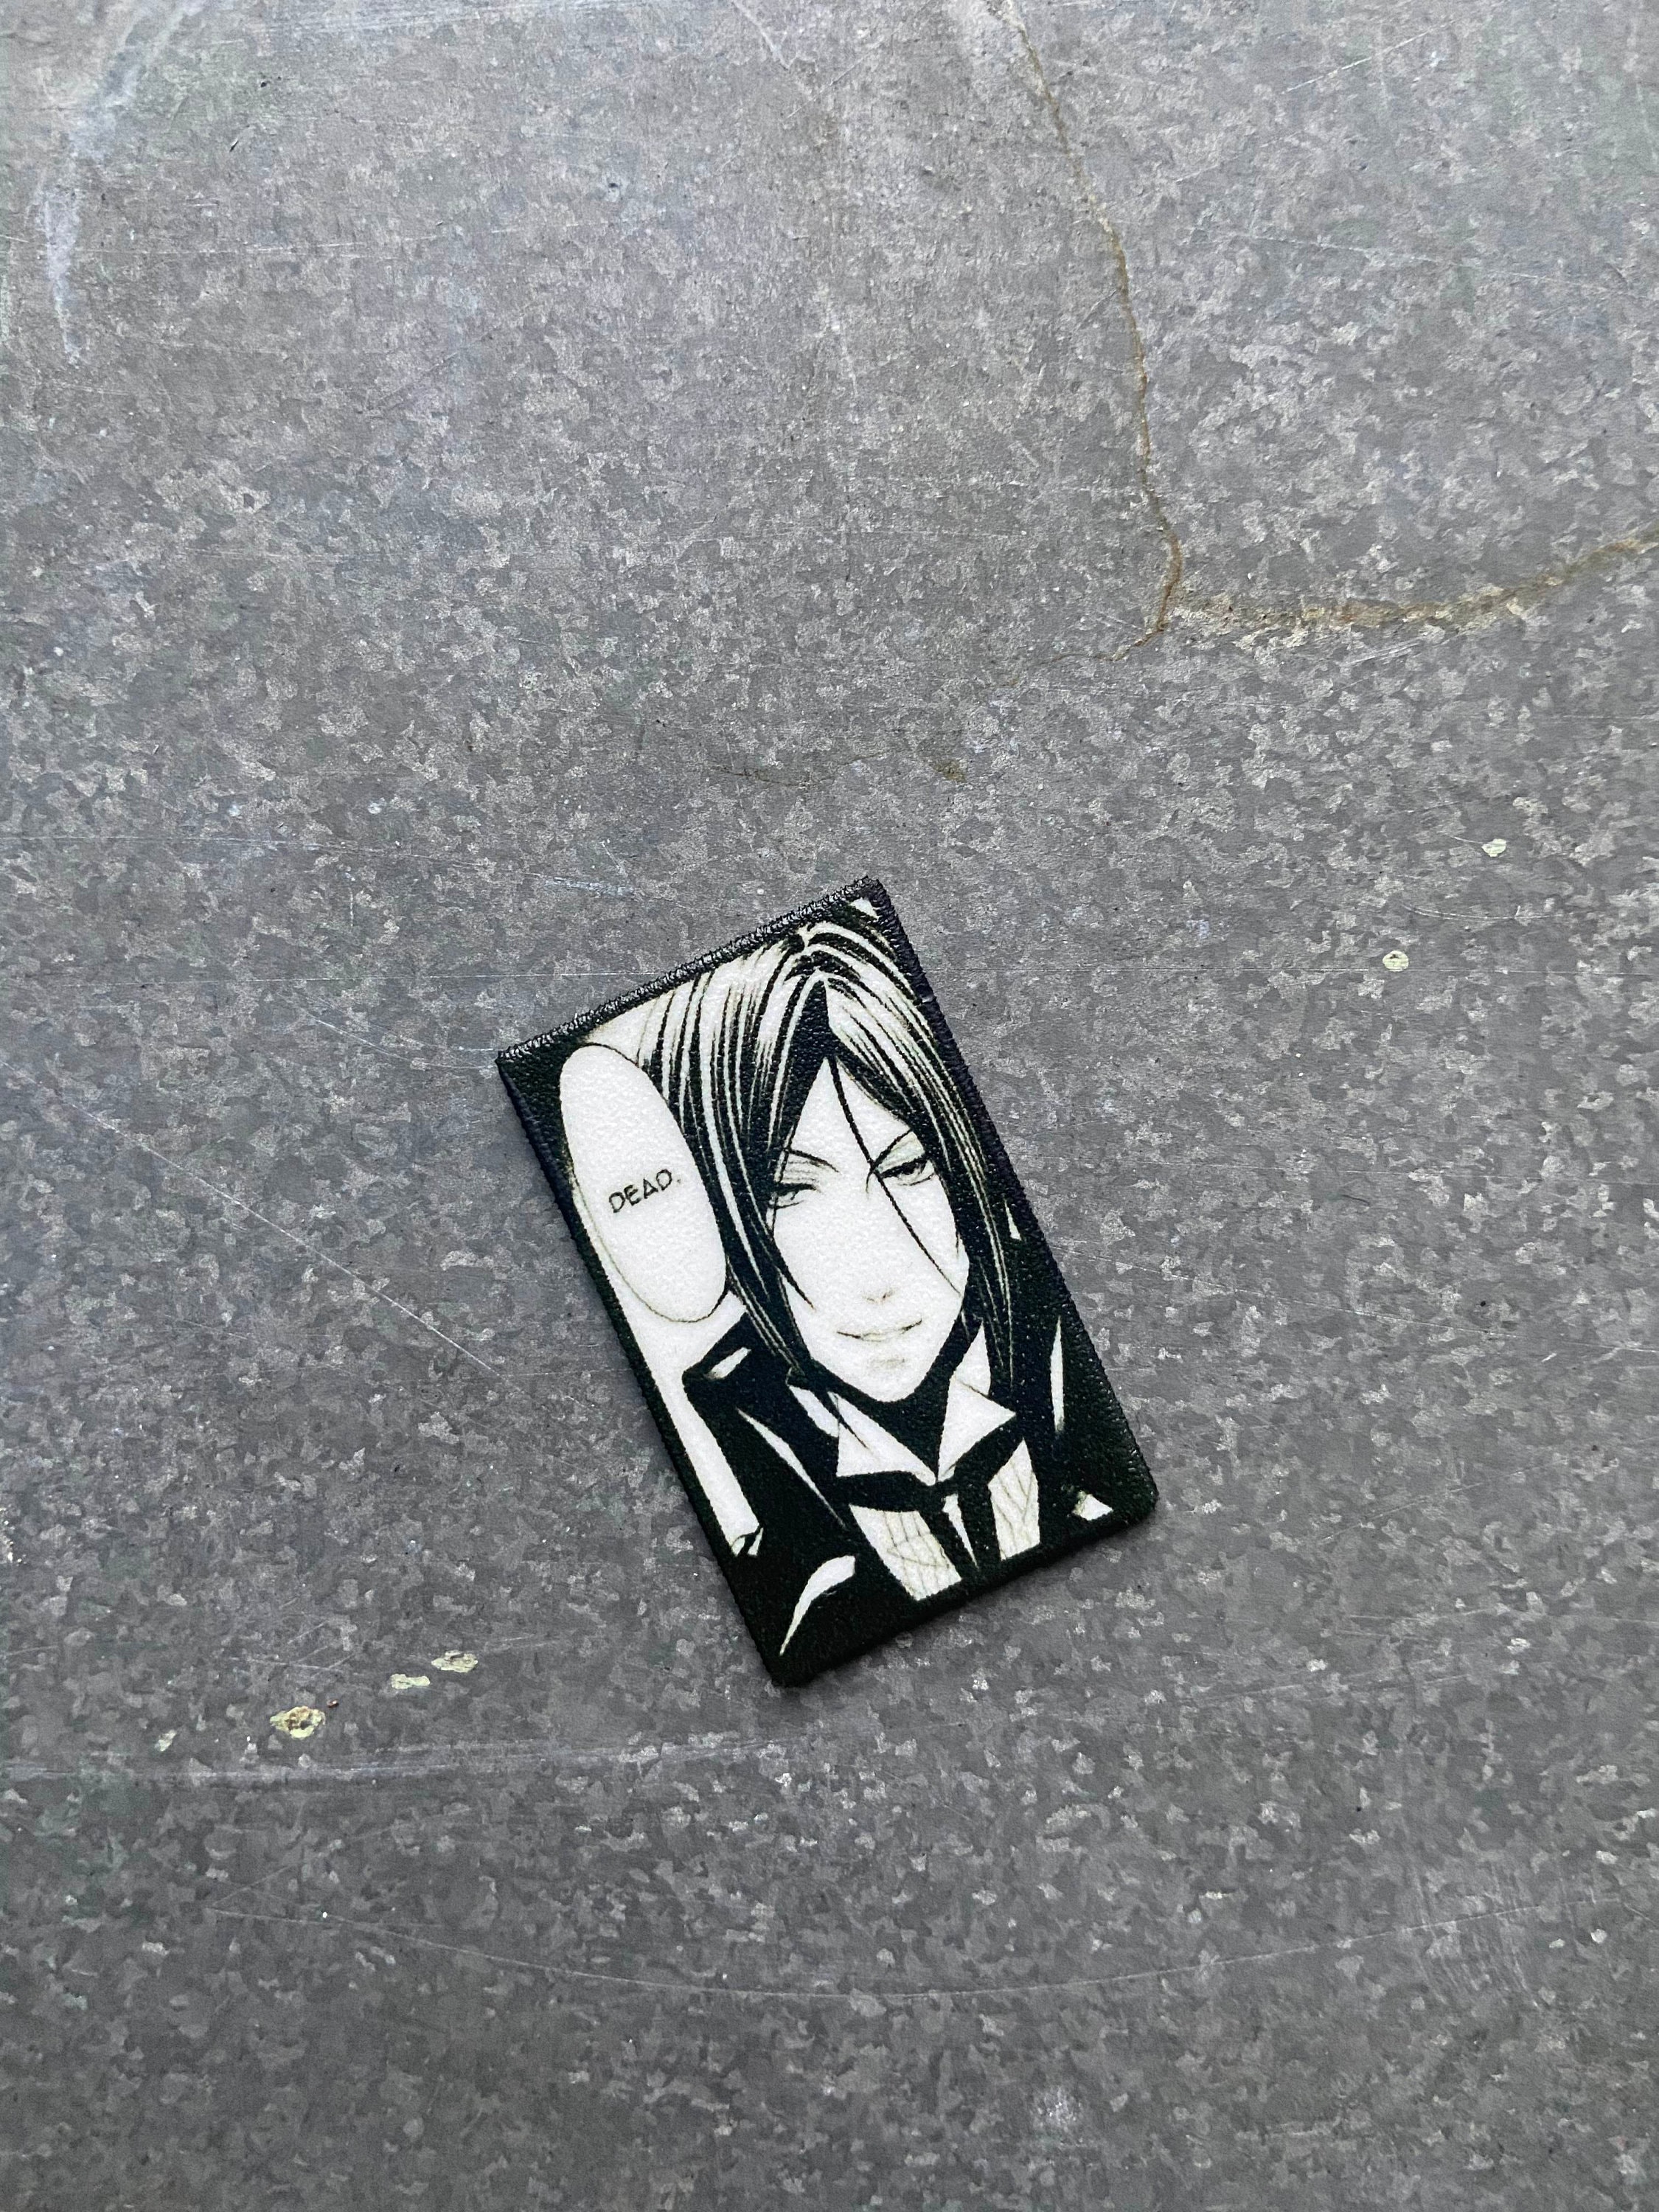 Pin by girl fail on Kuroshitsuji (black butler)